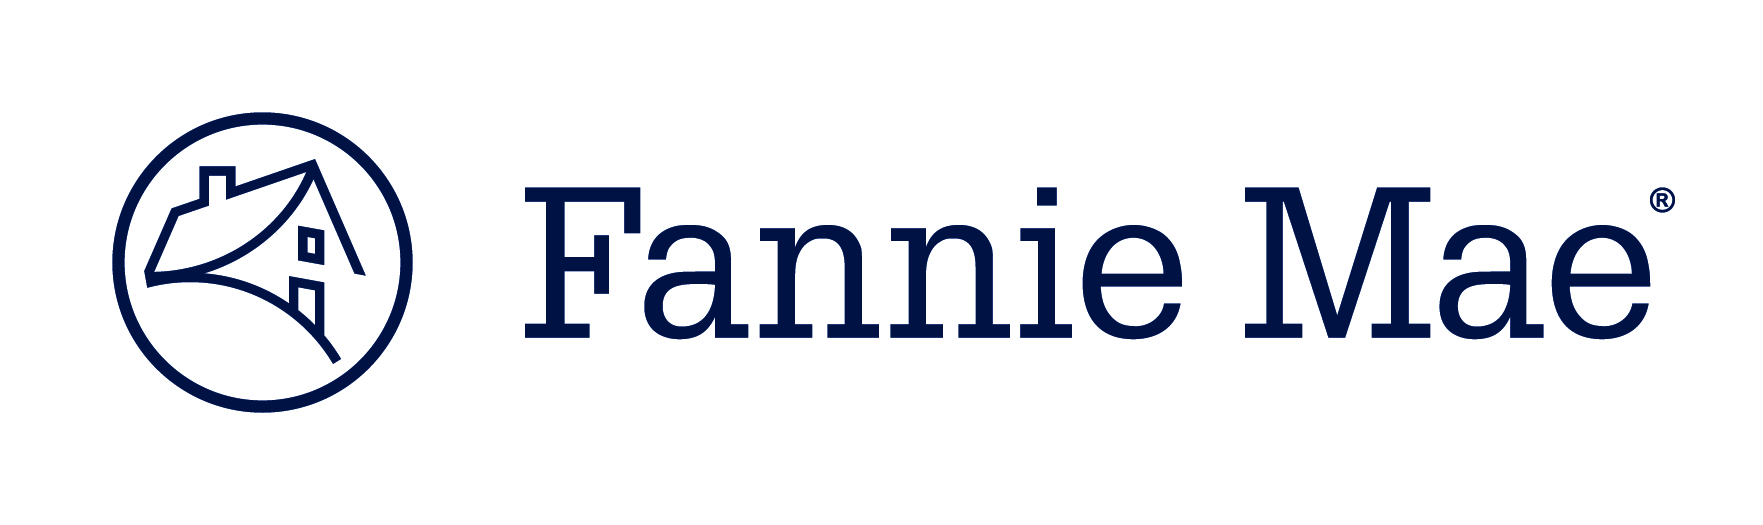 Fannie-Mae_logo_large_nvy